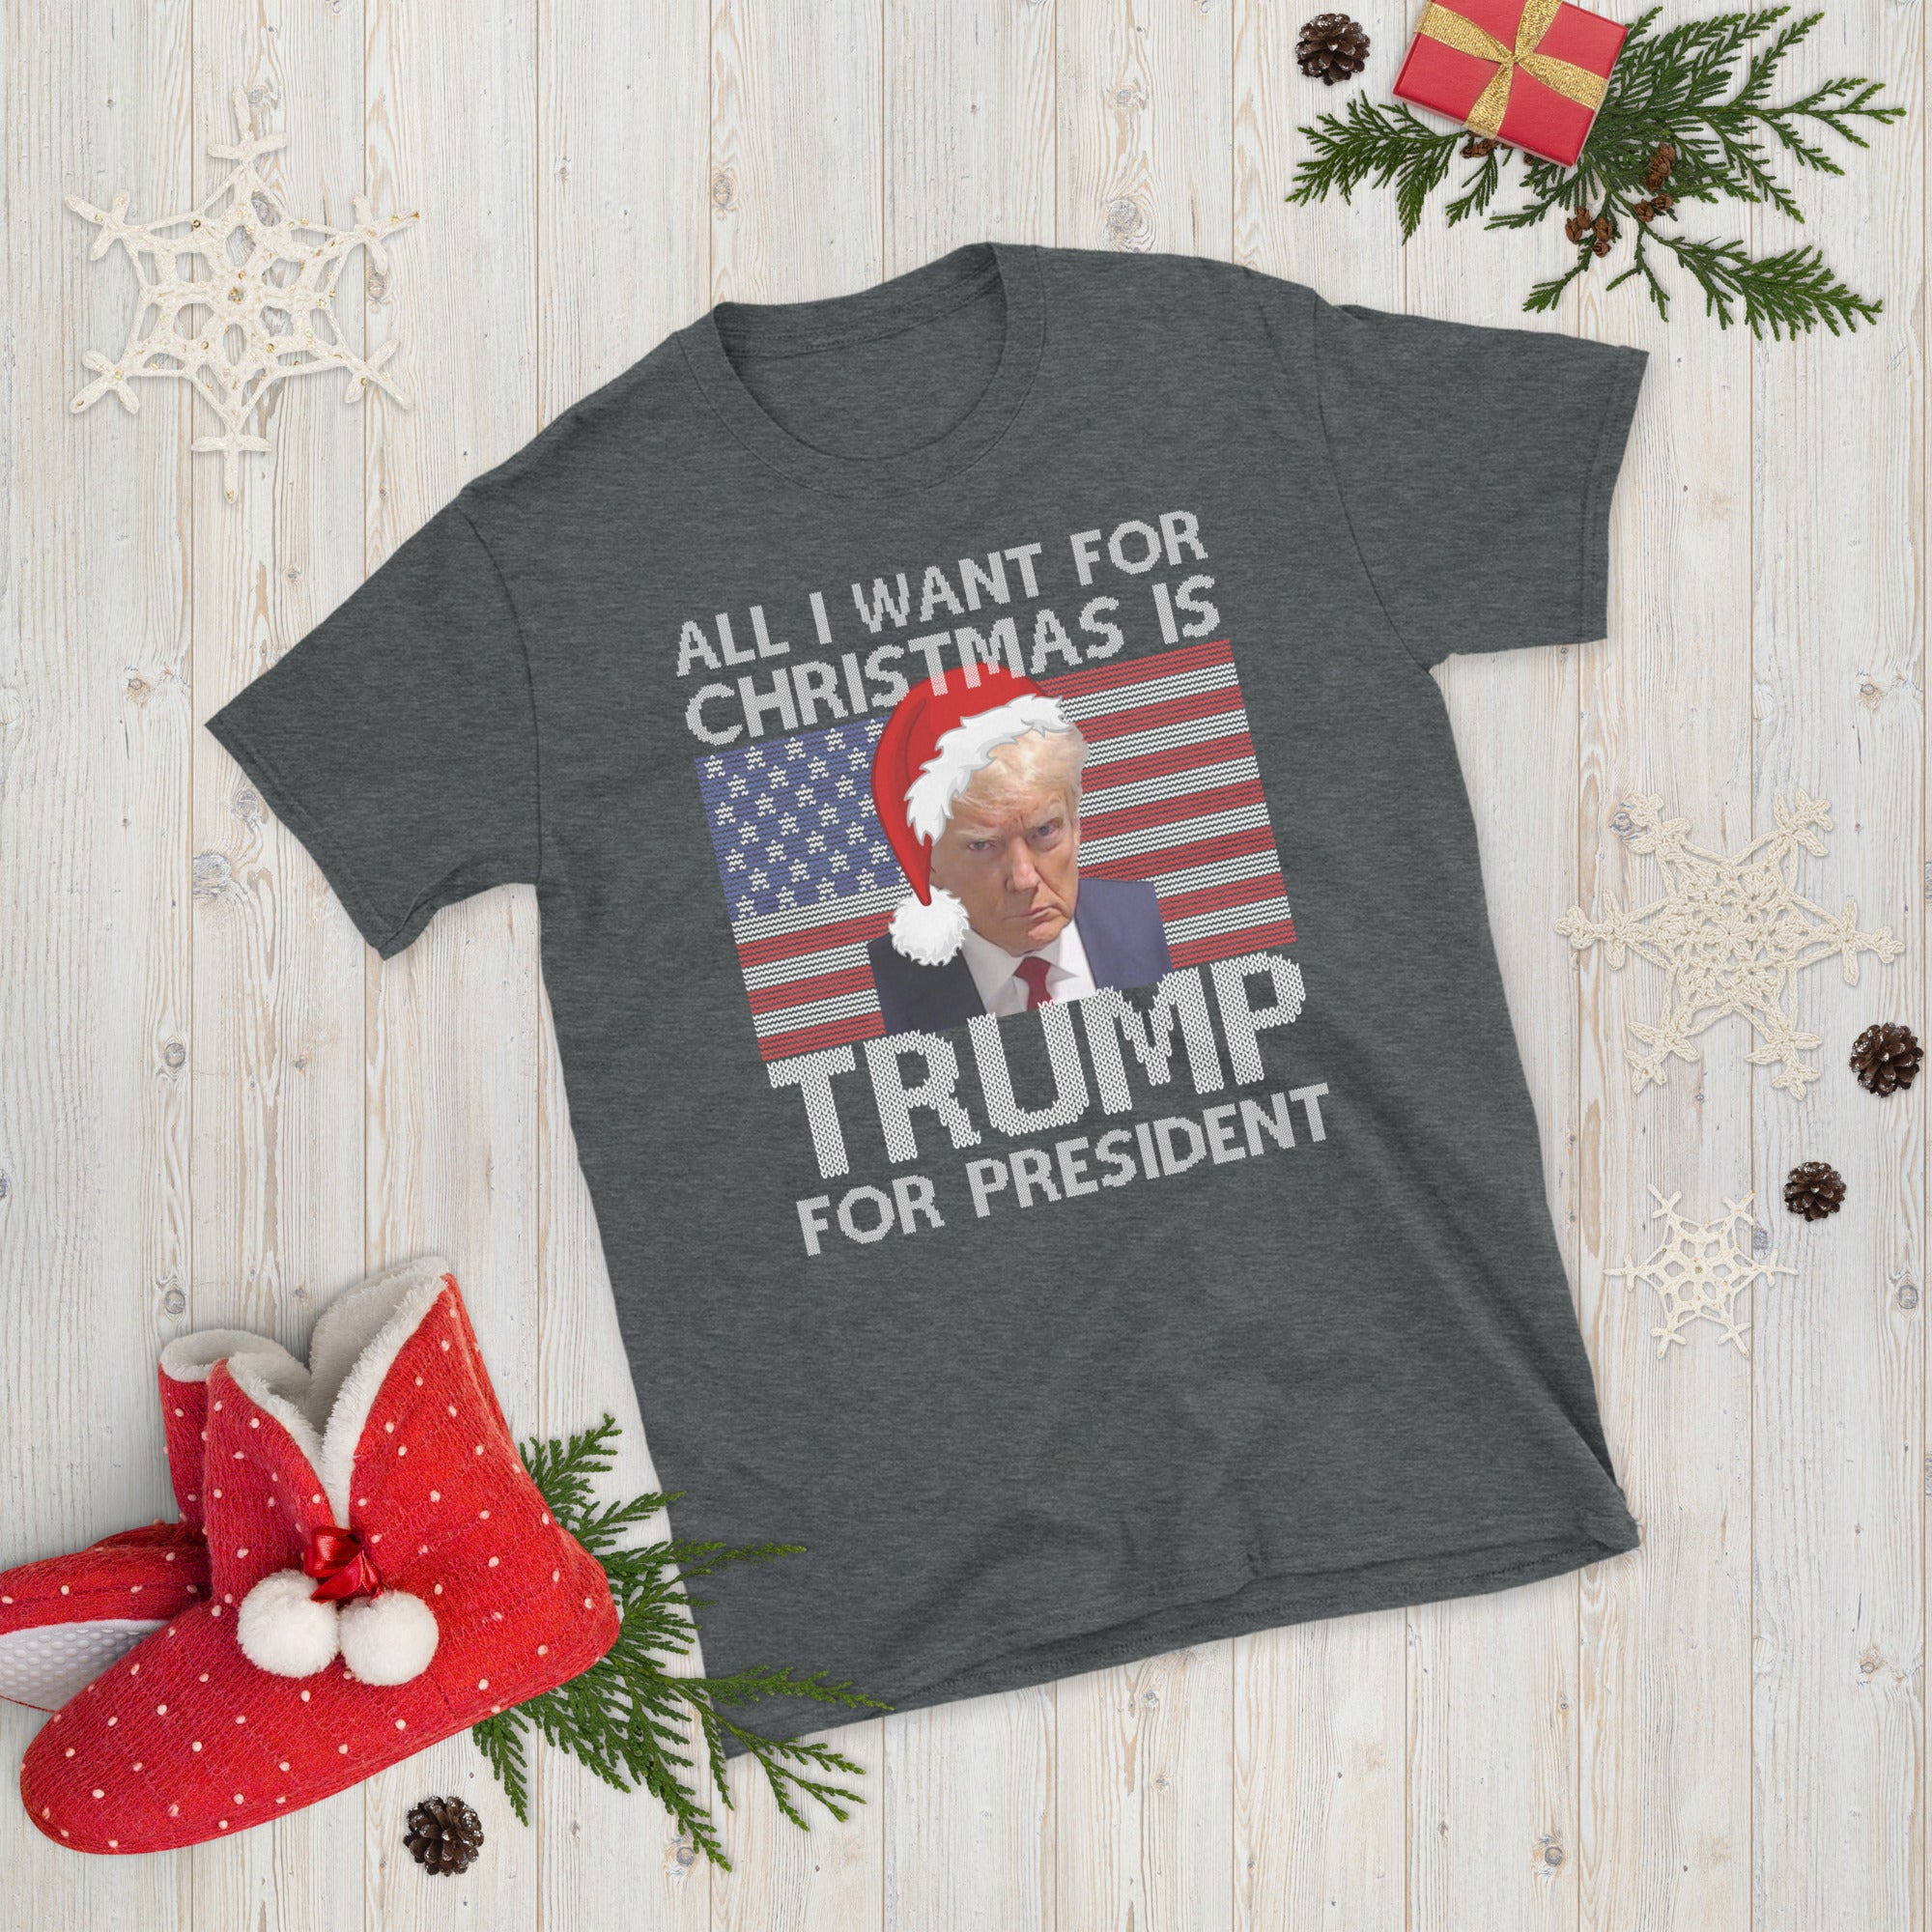 All I Want For Christmas Is Trump For President, Trumpmugshot Shirt, Funny Donald Trump Christmas TShirt, Trump Santa Xmas Ugly Christmas - Madeinsea©